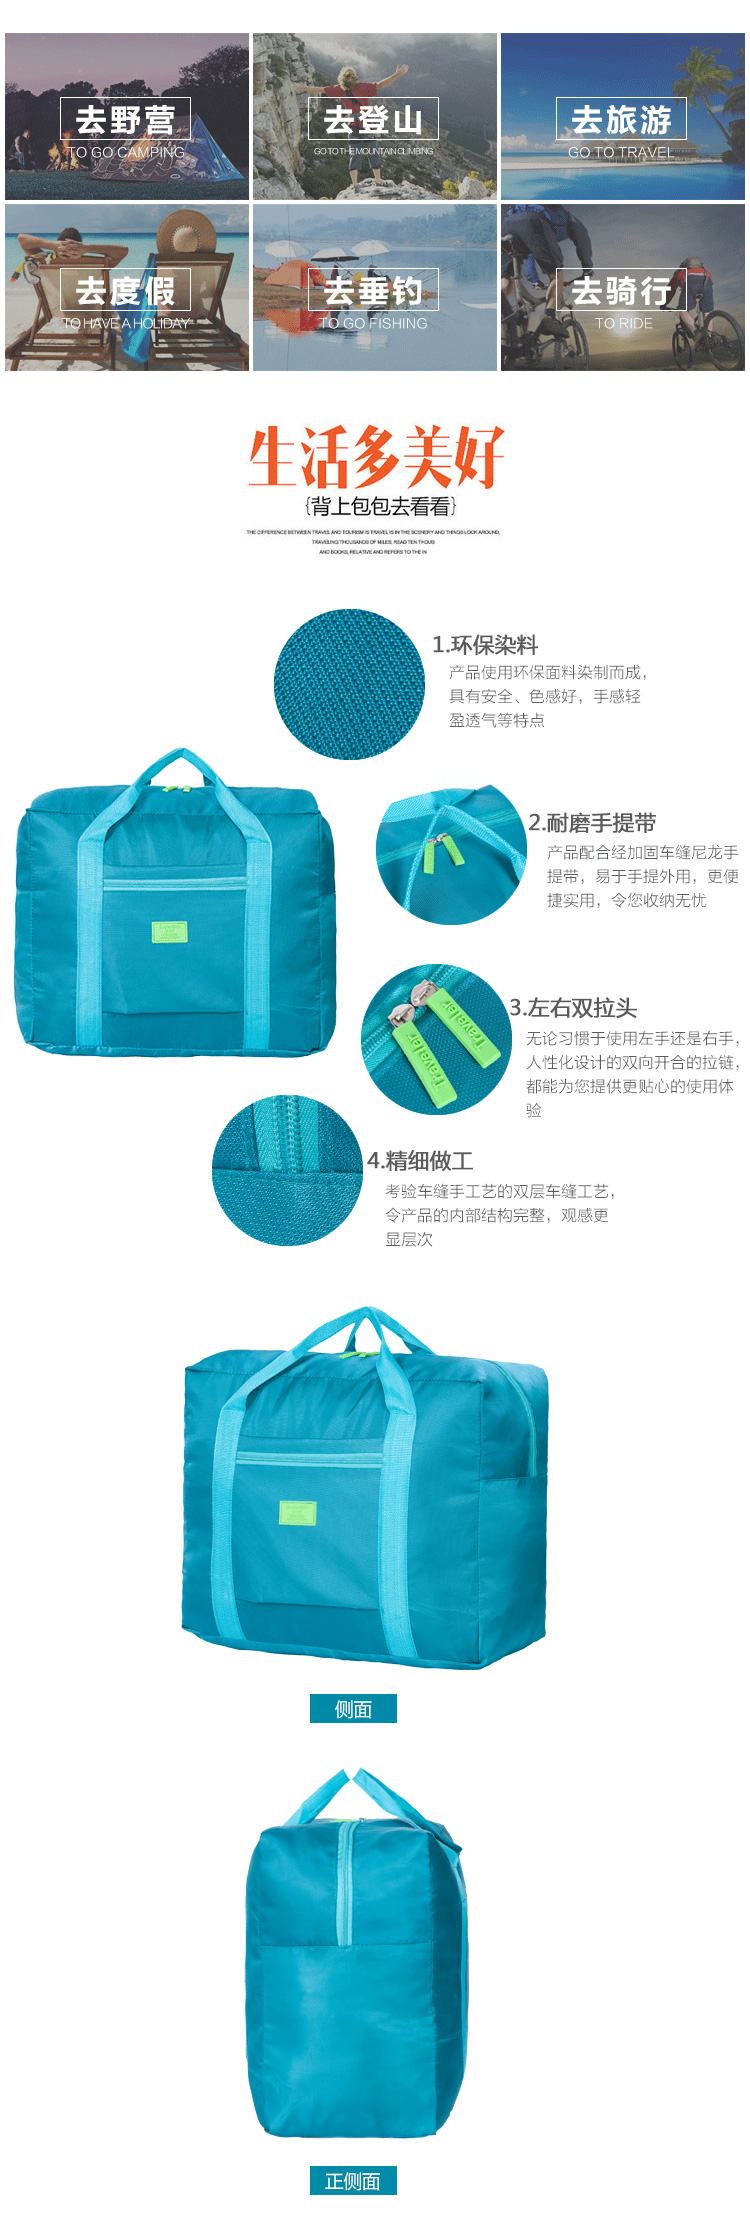 Waterproof luggage bag travel bag folding bag handbag3